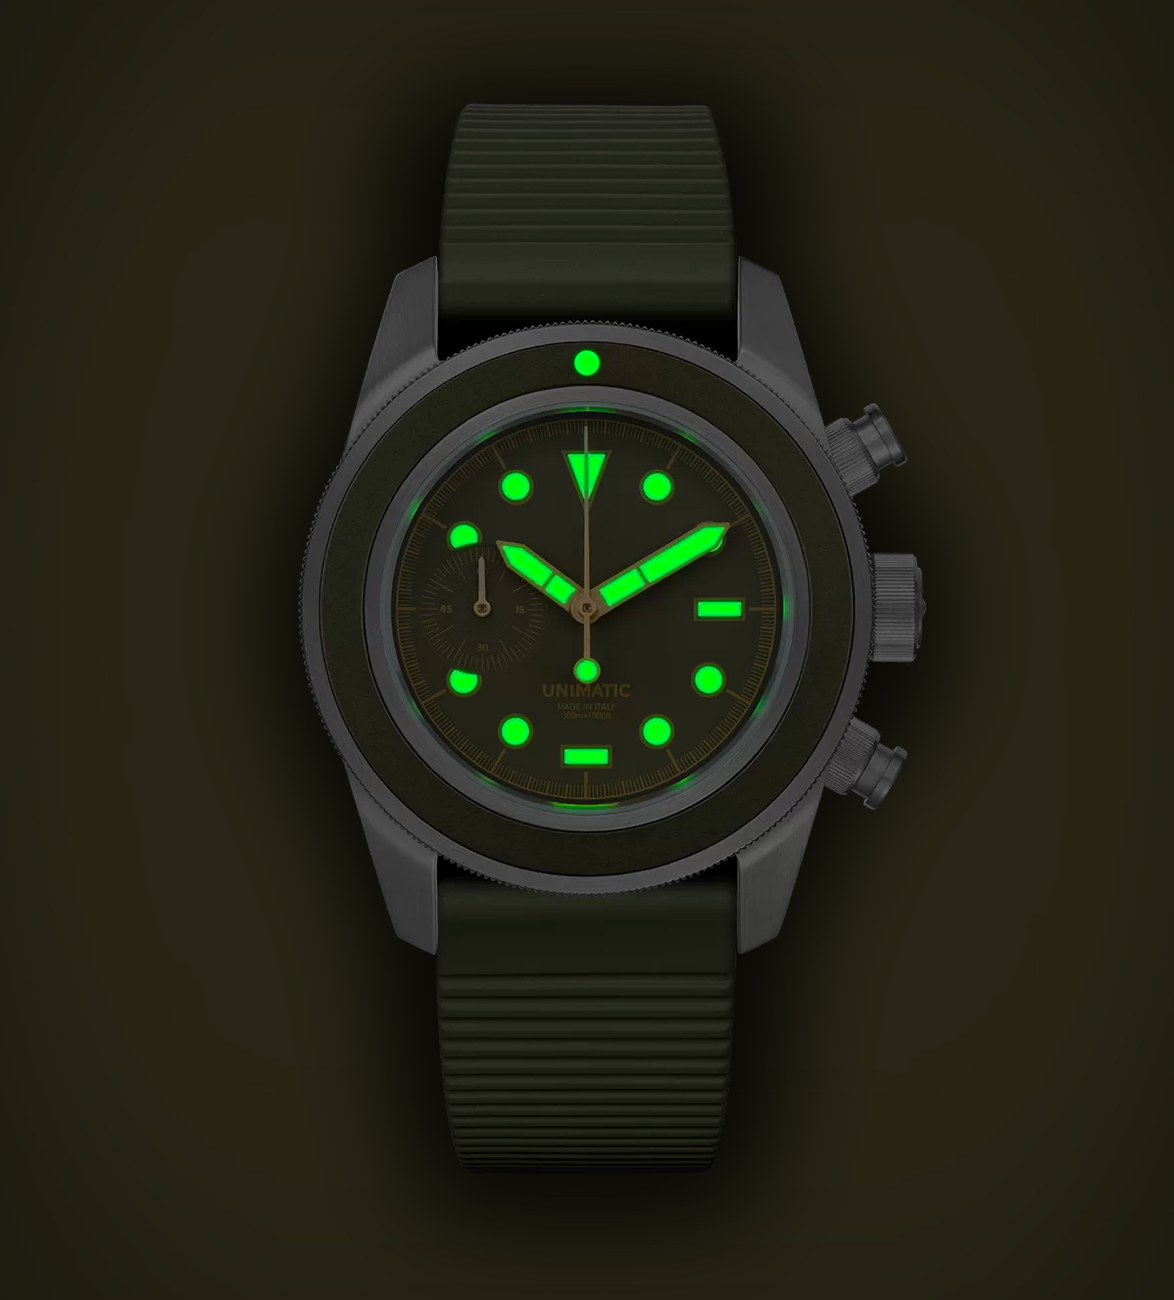 unimatic-series-8-watches-6.jpg